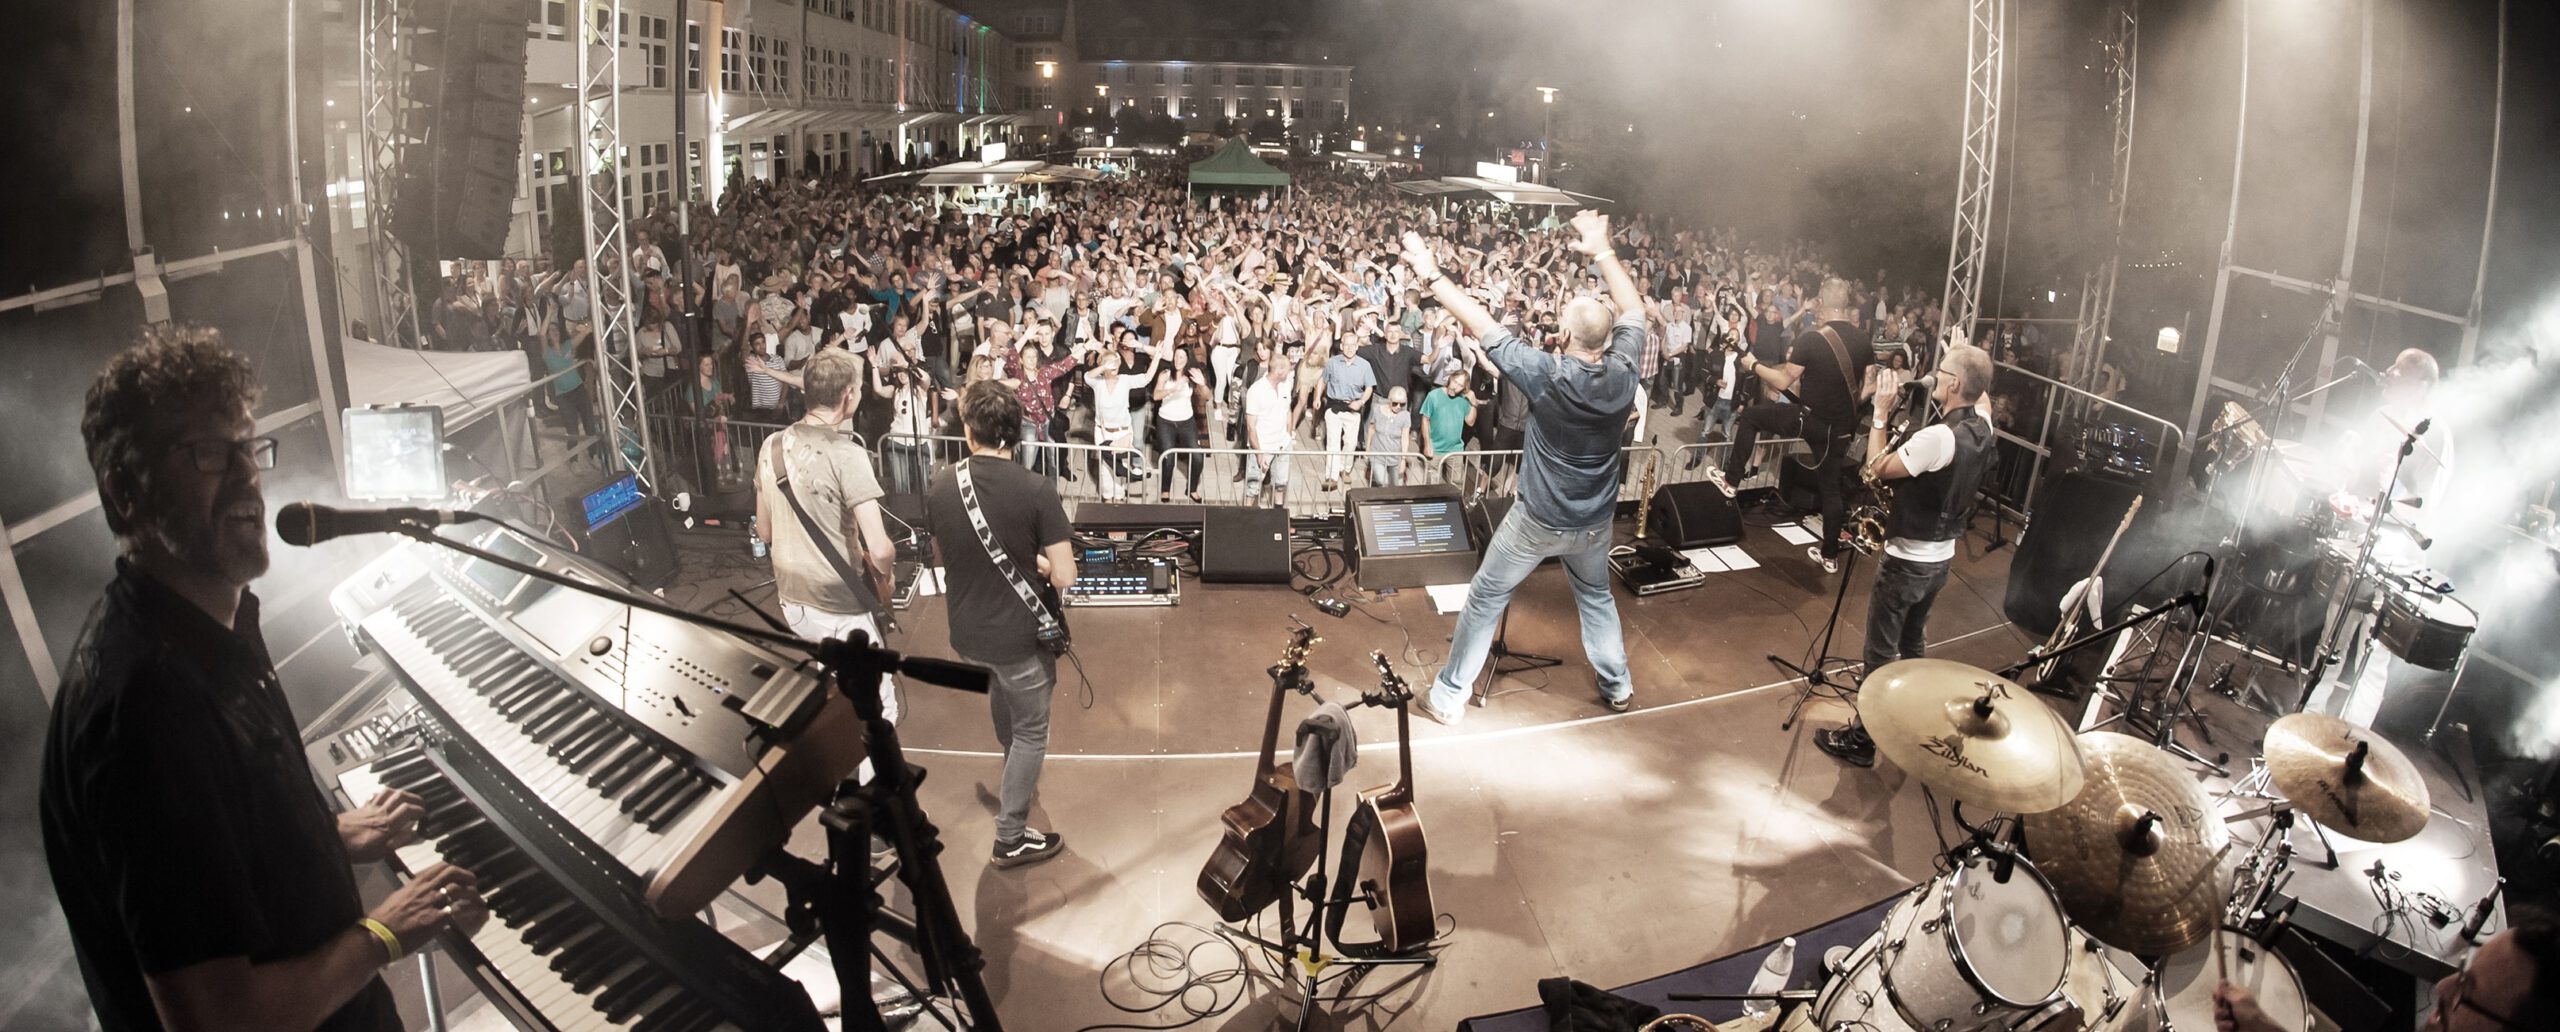 dma-music_booking-agentur_musik_tribute-bands_cover-bands_aschaffenburg-frankfurt_MAM_live1